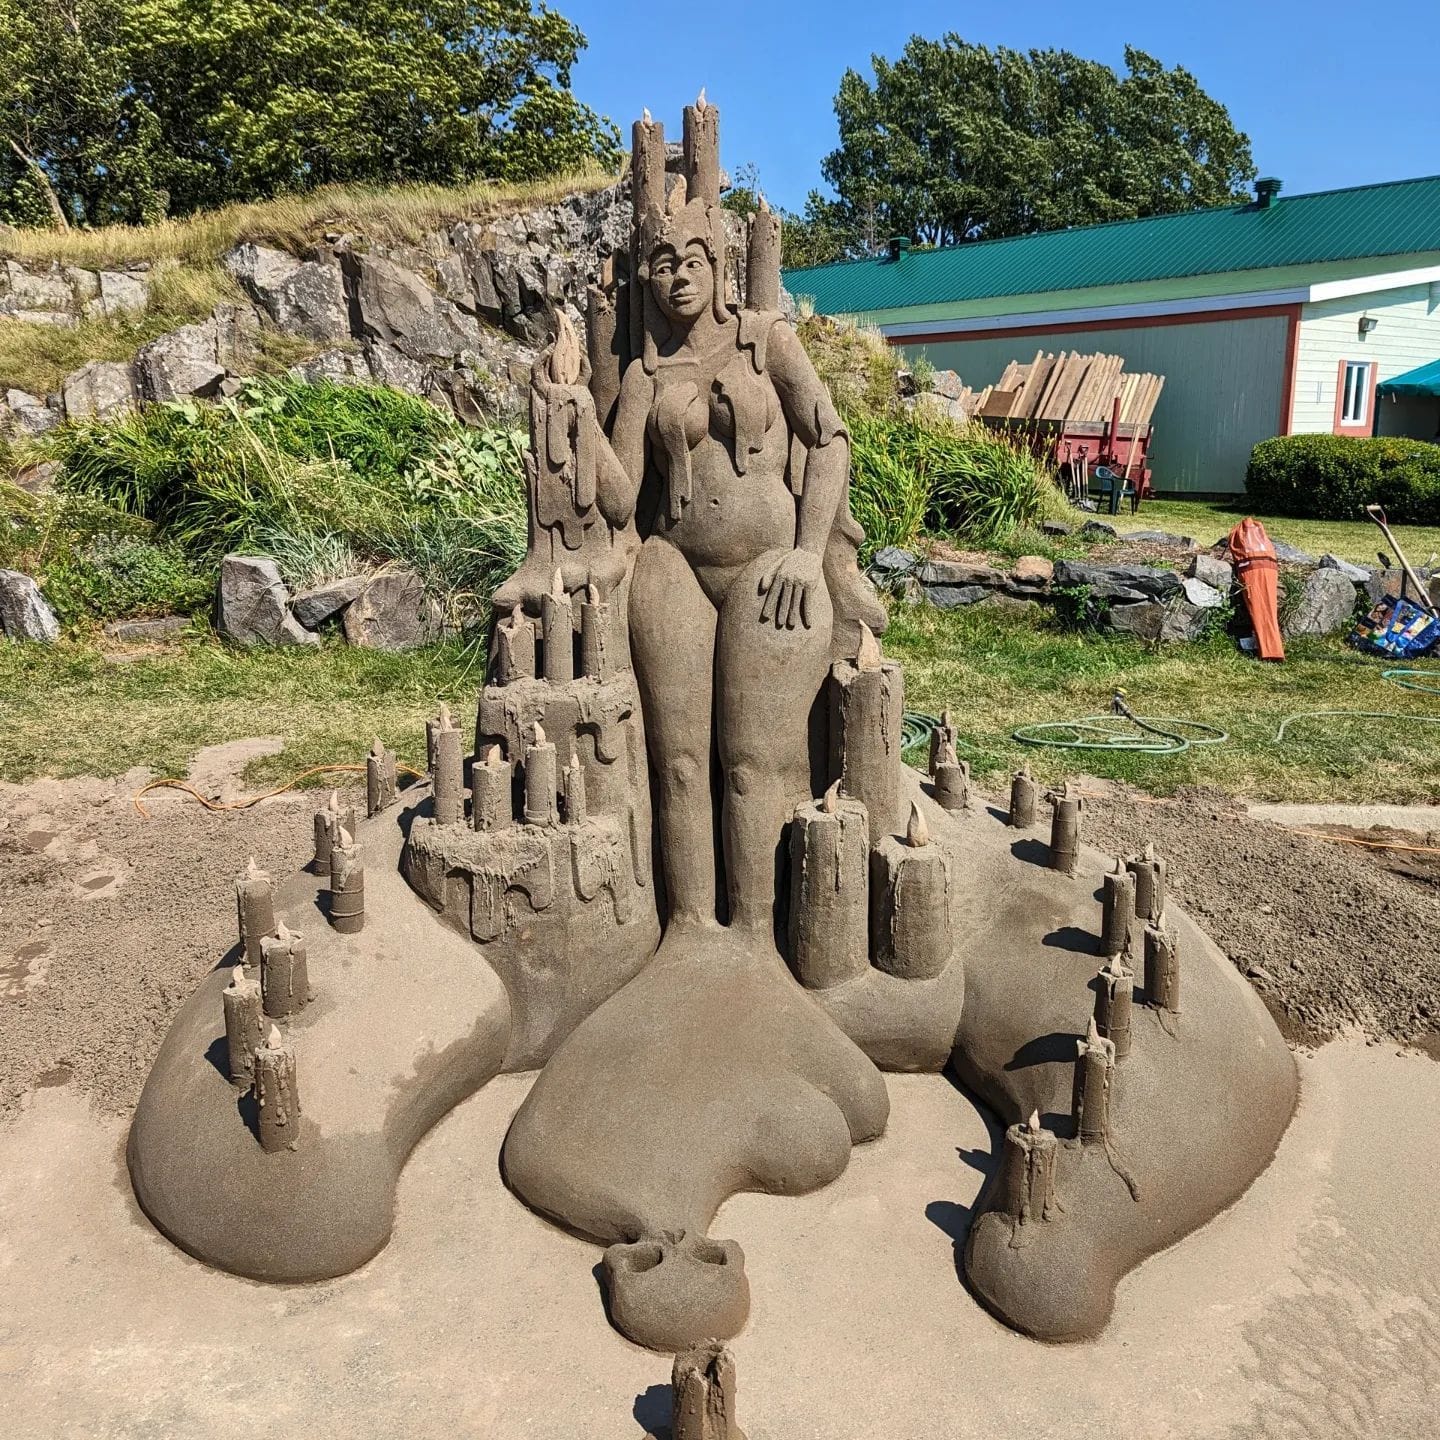 Sea lady sand castle sculpture by Guy-Olivier Deveau, the centerpiece of a sandy shrine. 